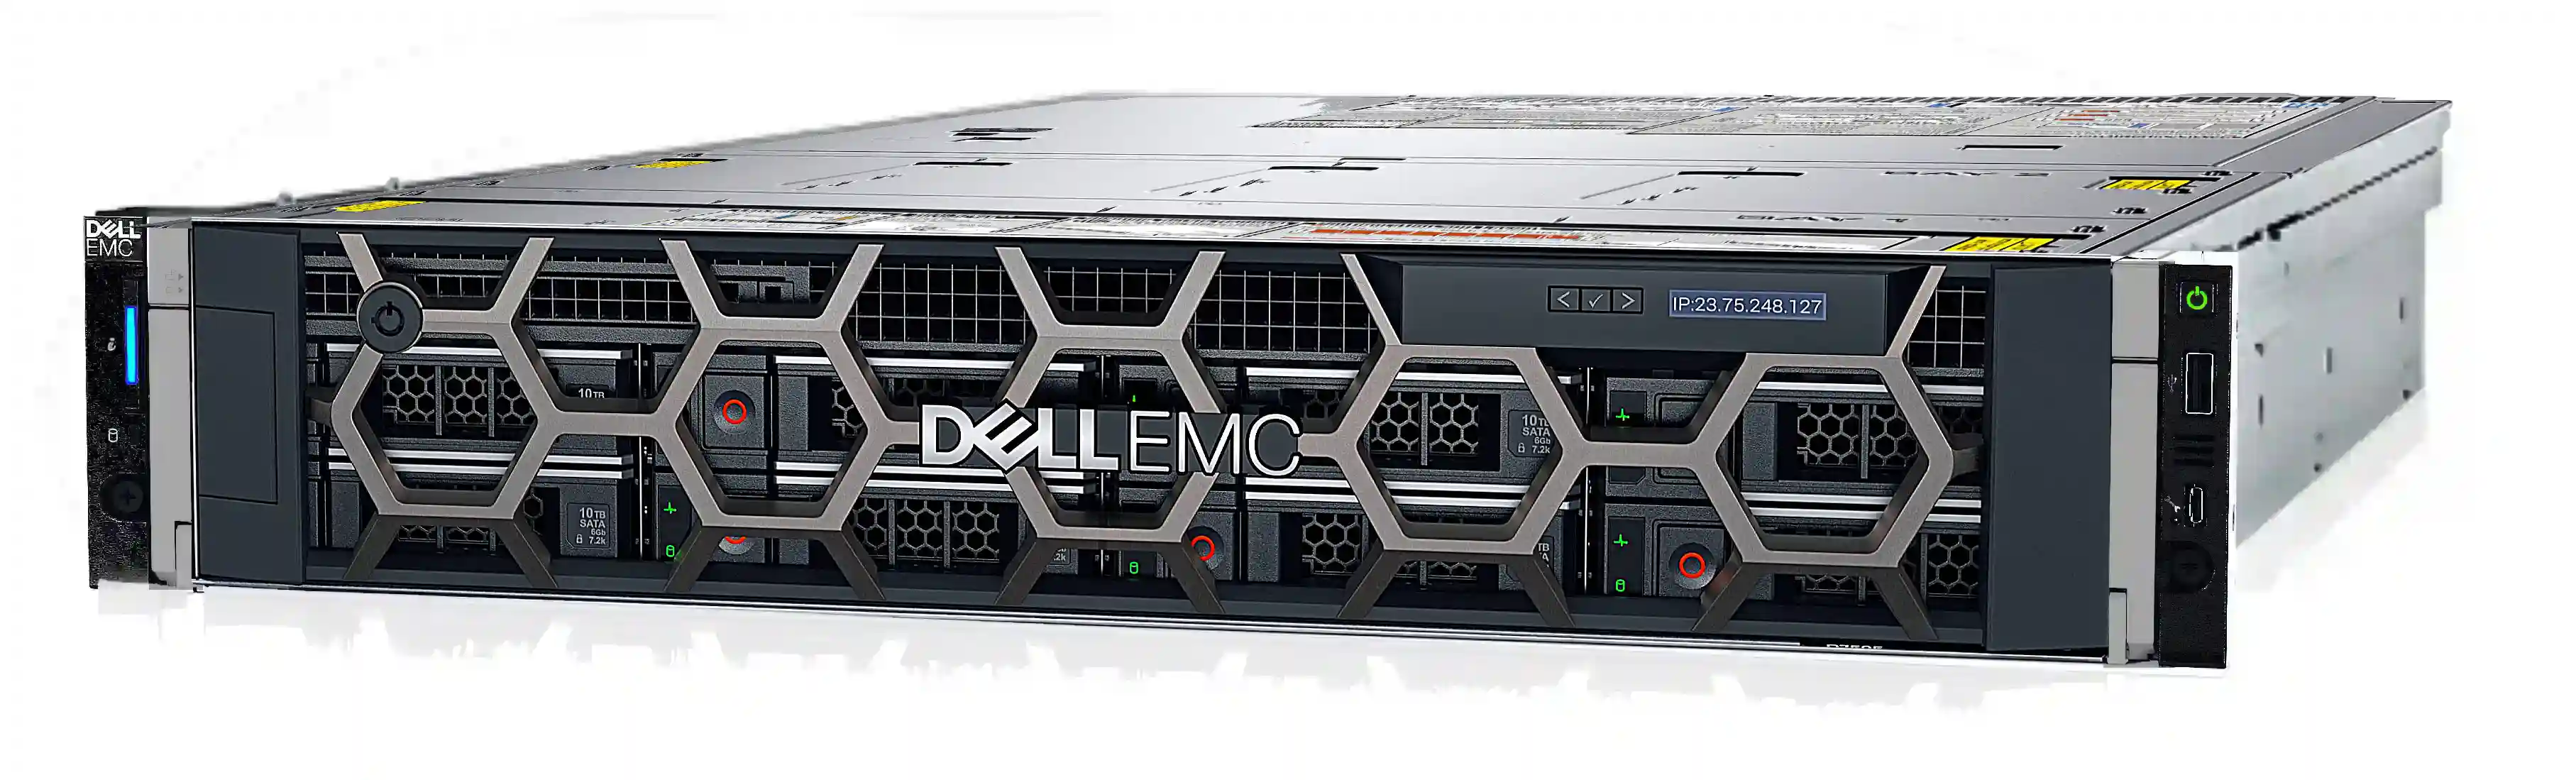 Dell R760xd2 Сервер Dell EMC PowerEdge R760xd 2U Rack Servers серверы